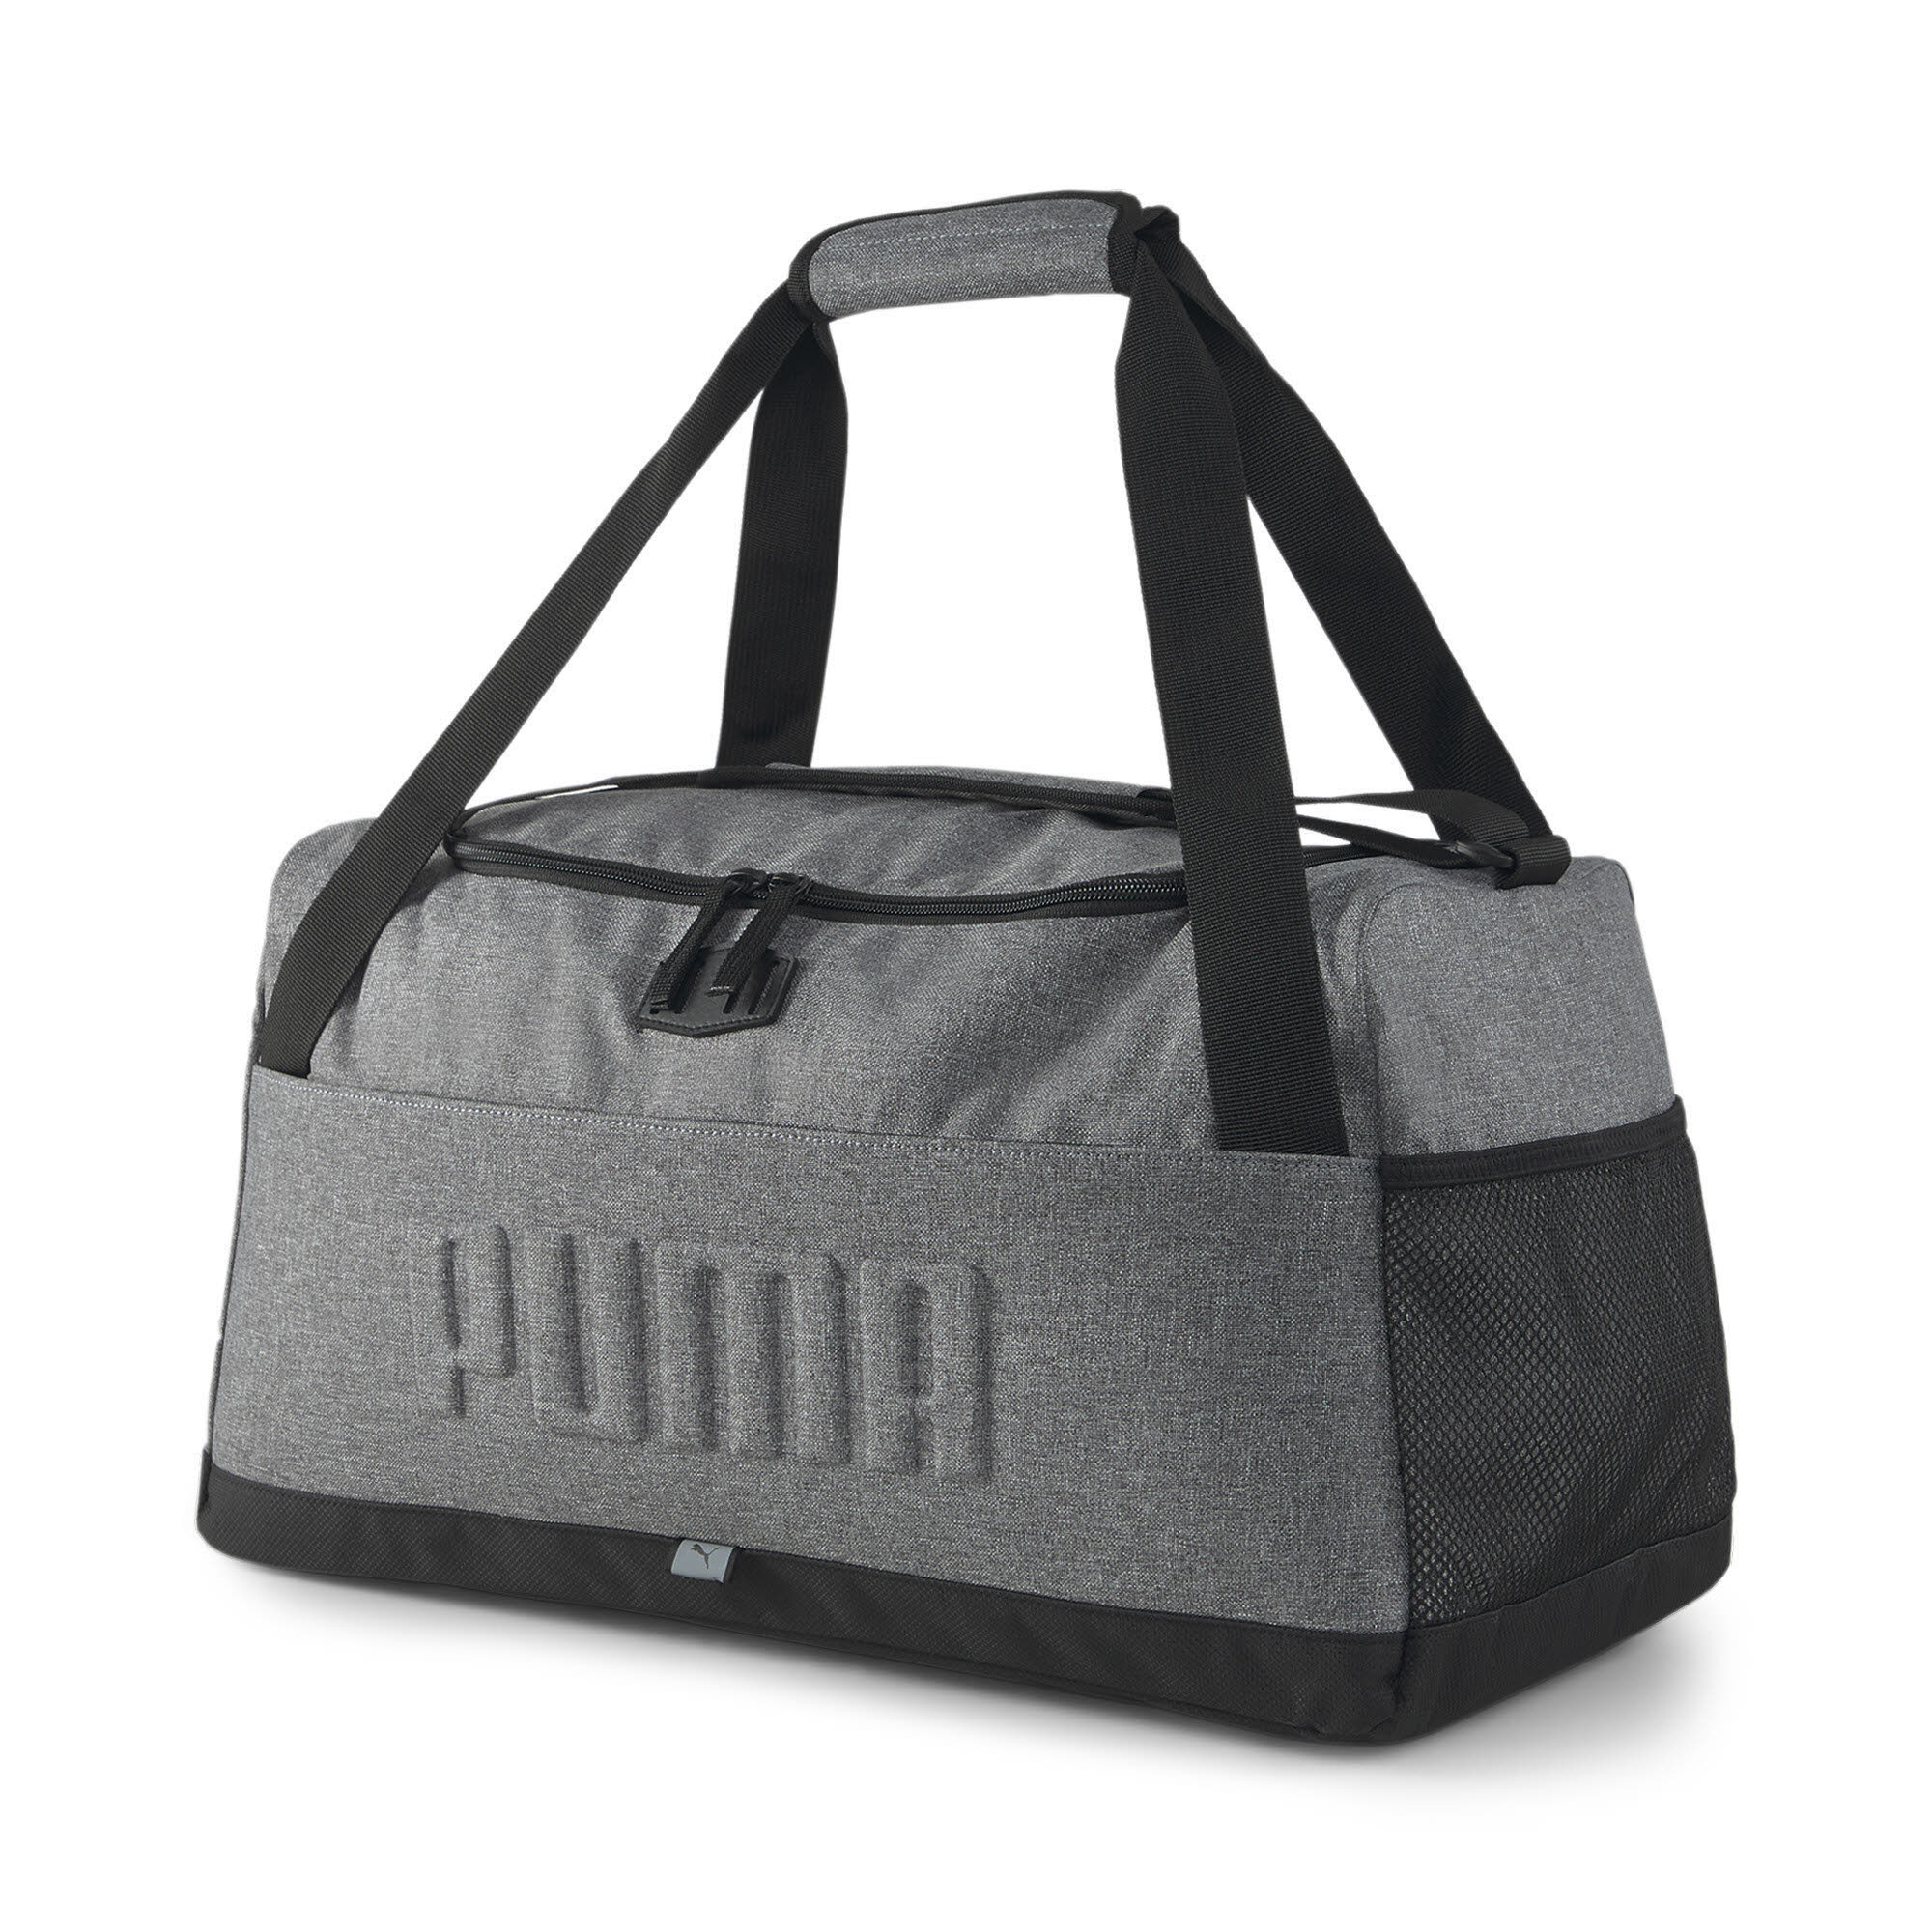 Puma S Sports Bag S Unisex Sporttasche Tasche grau